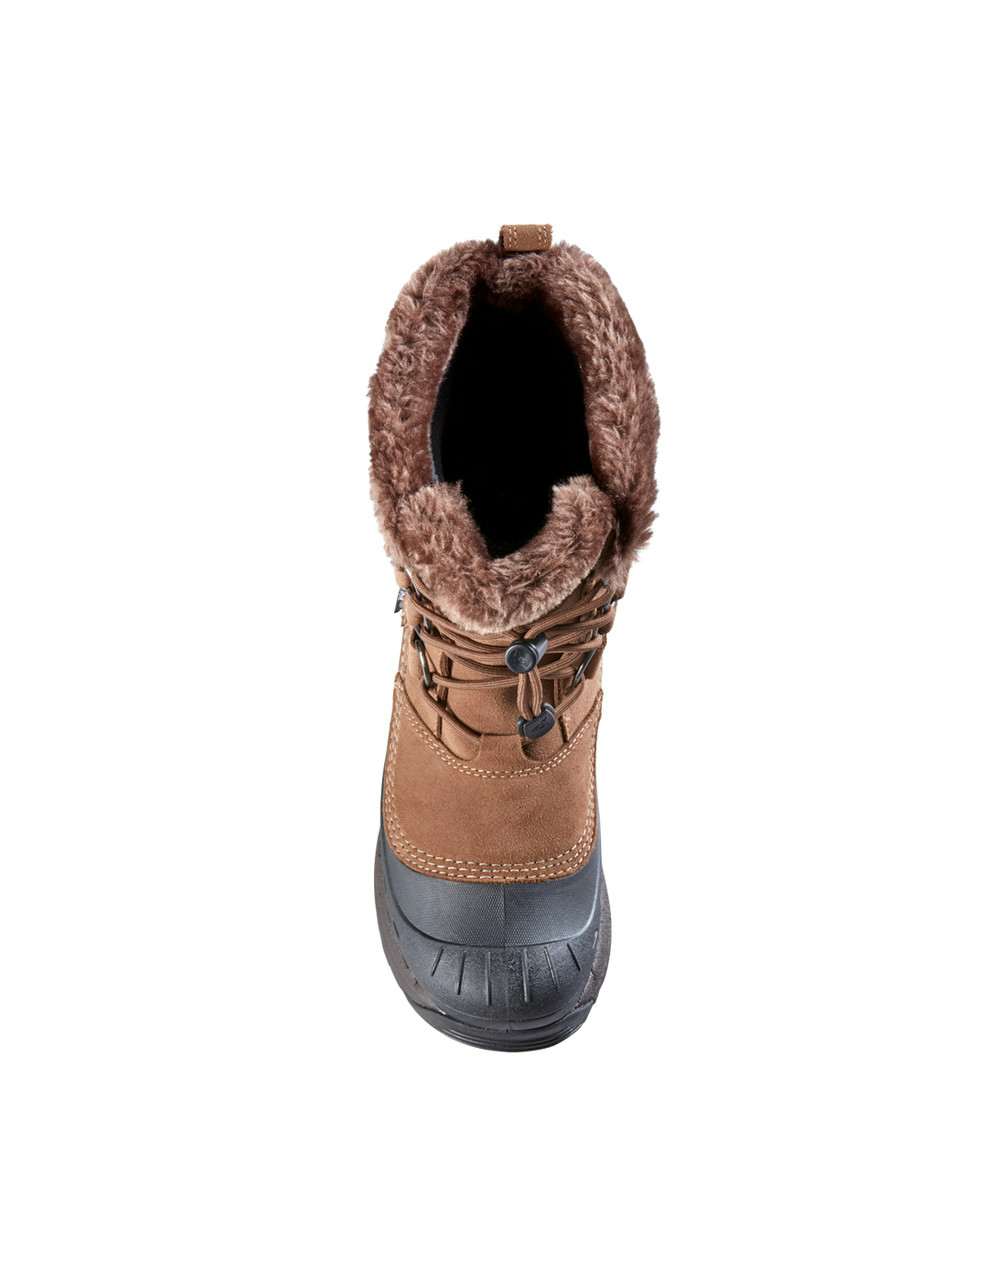 Chloe Waterproof Winter Boots Taupe